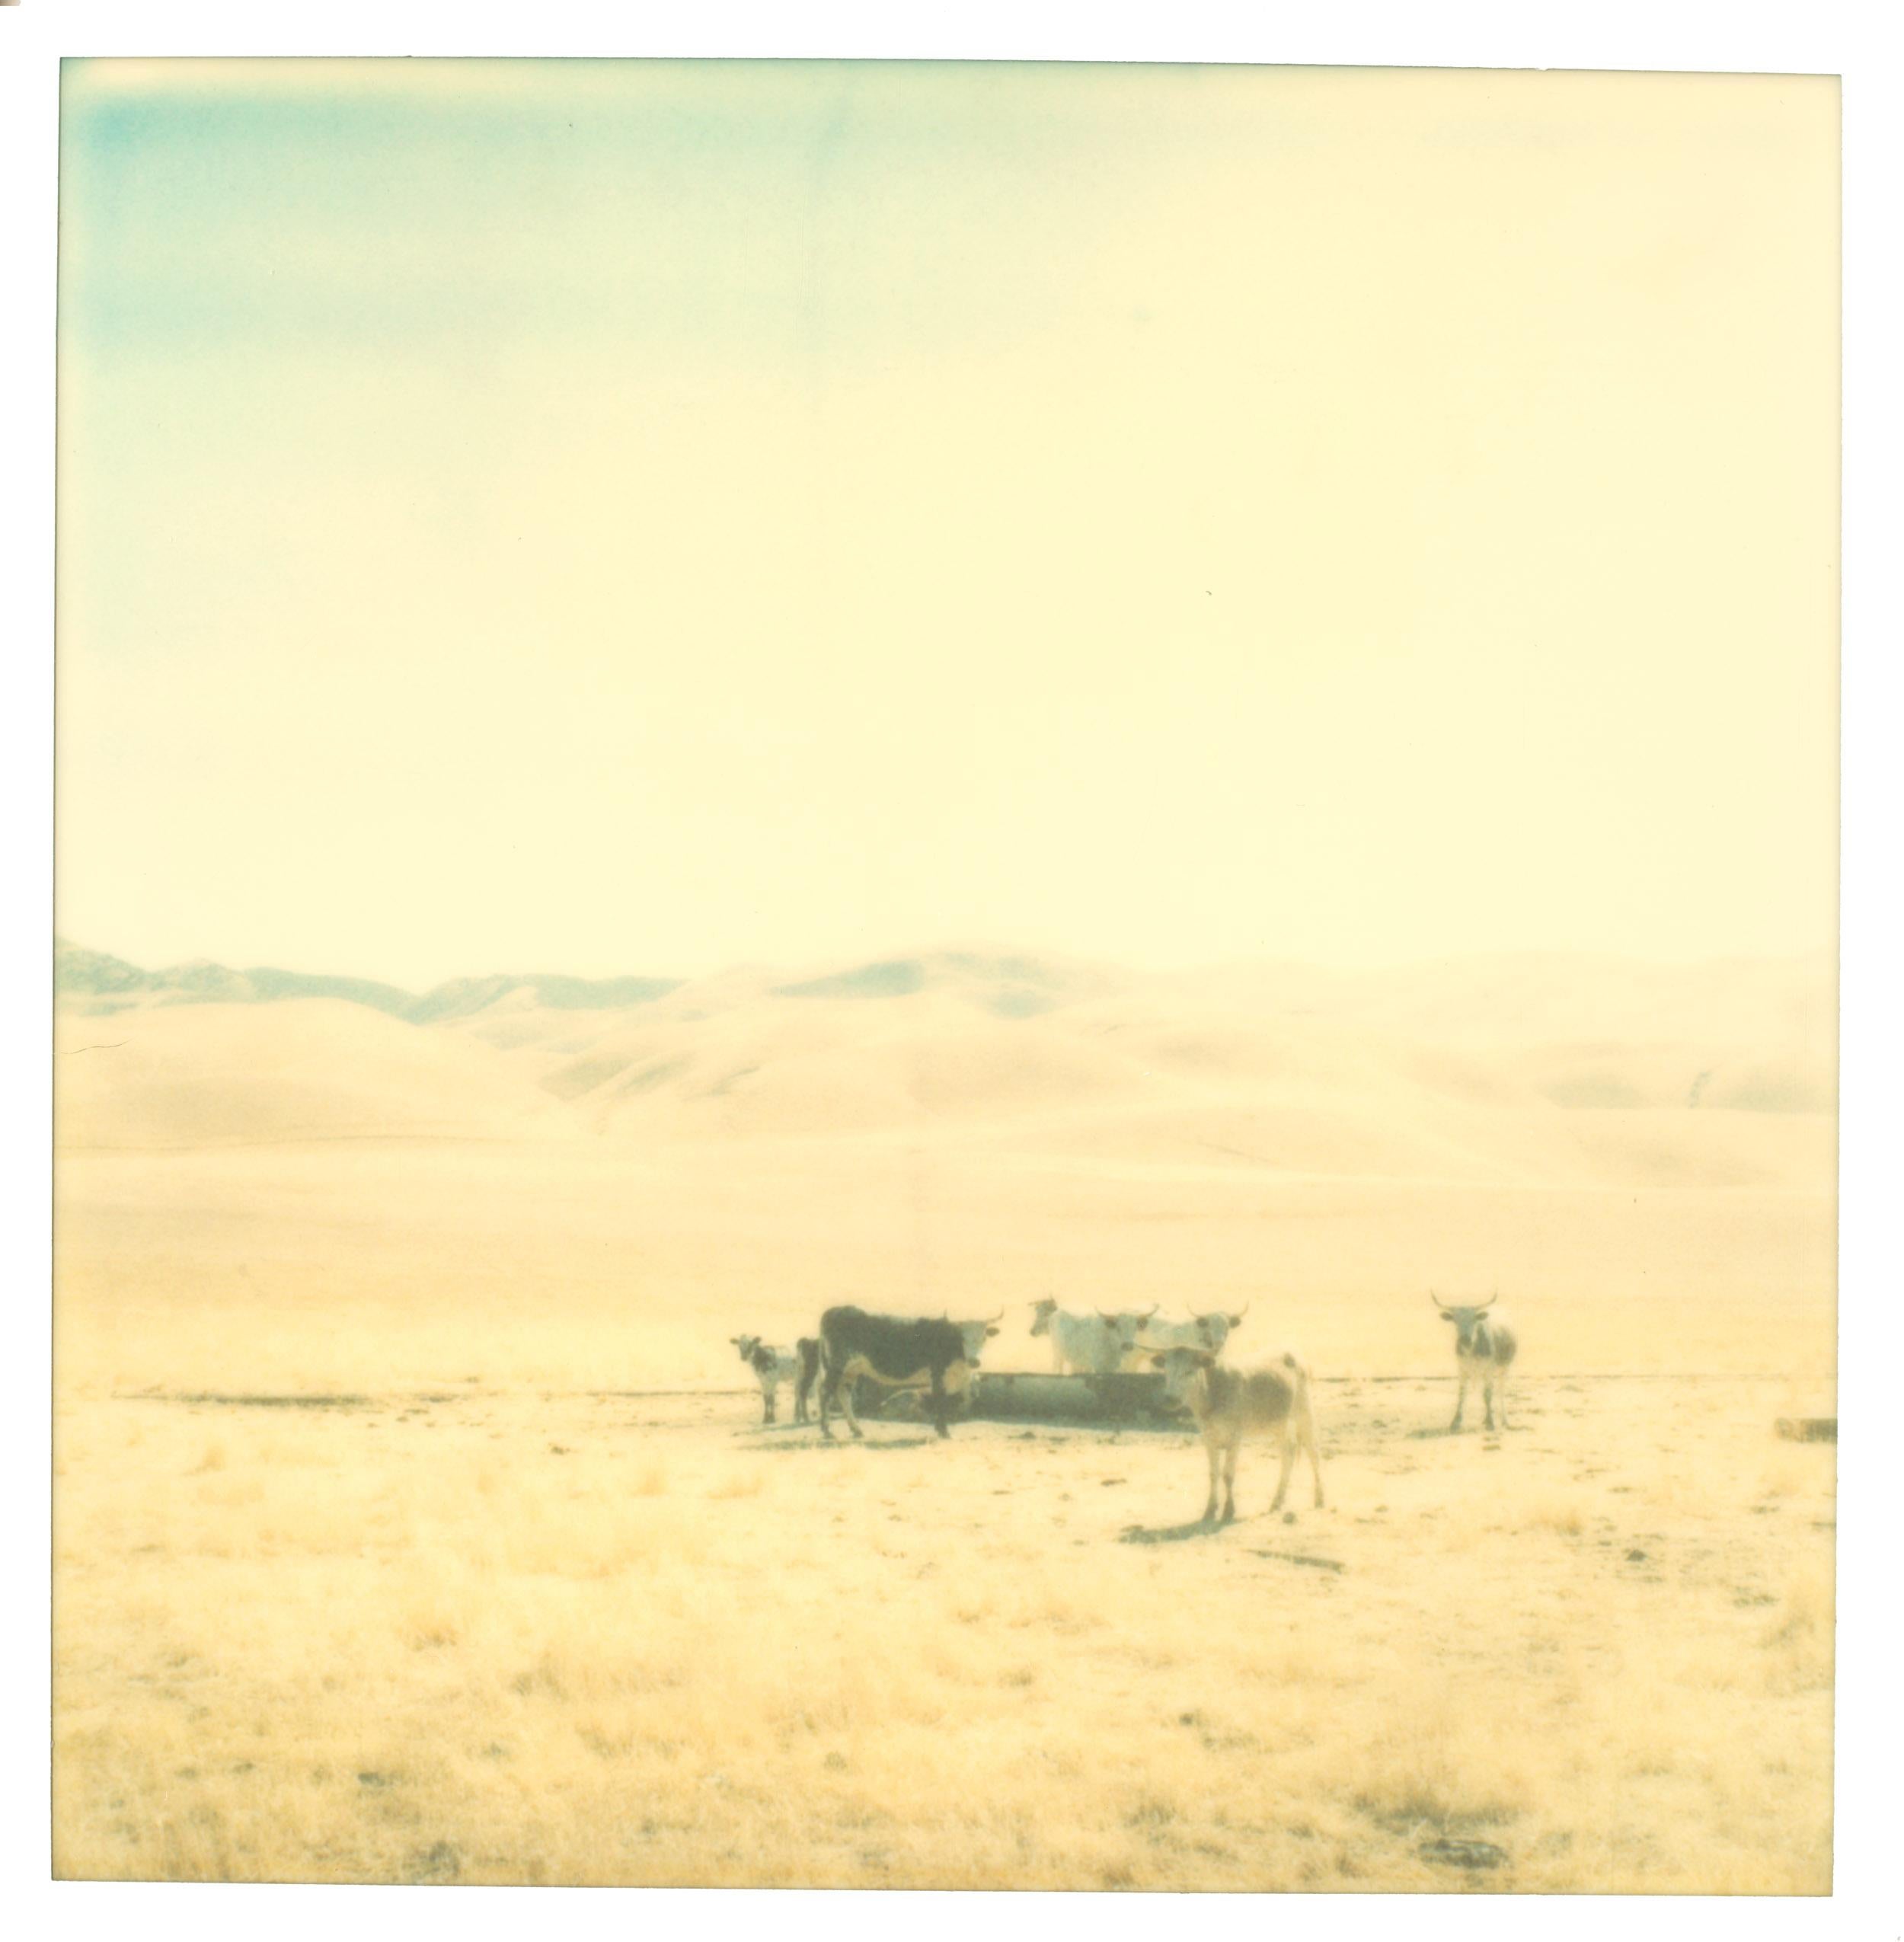 Untitled (Oilfields) triptych - not mounted - Contemporary, Polaroid, Landscape  - Photograph by Stefanie Schneider